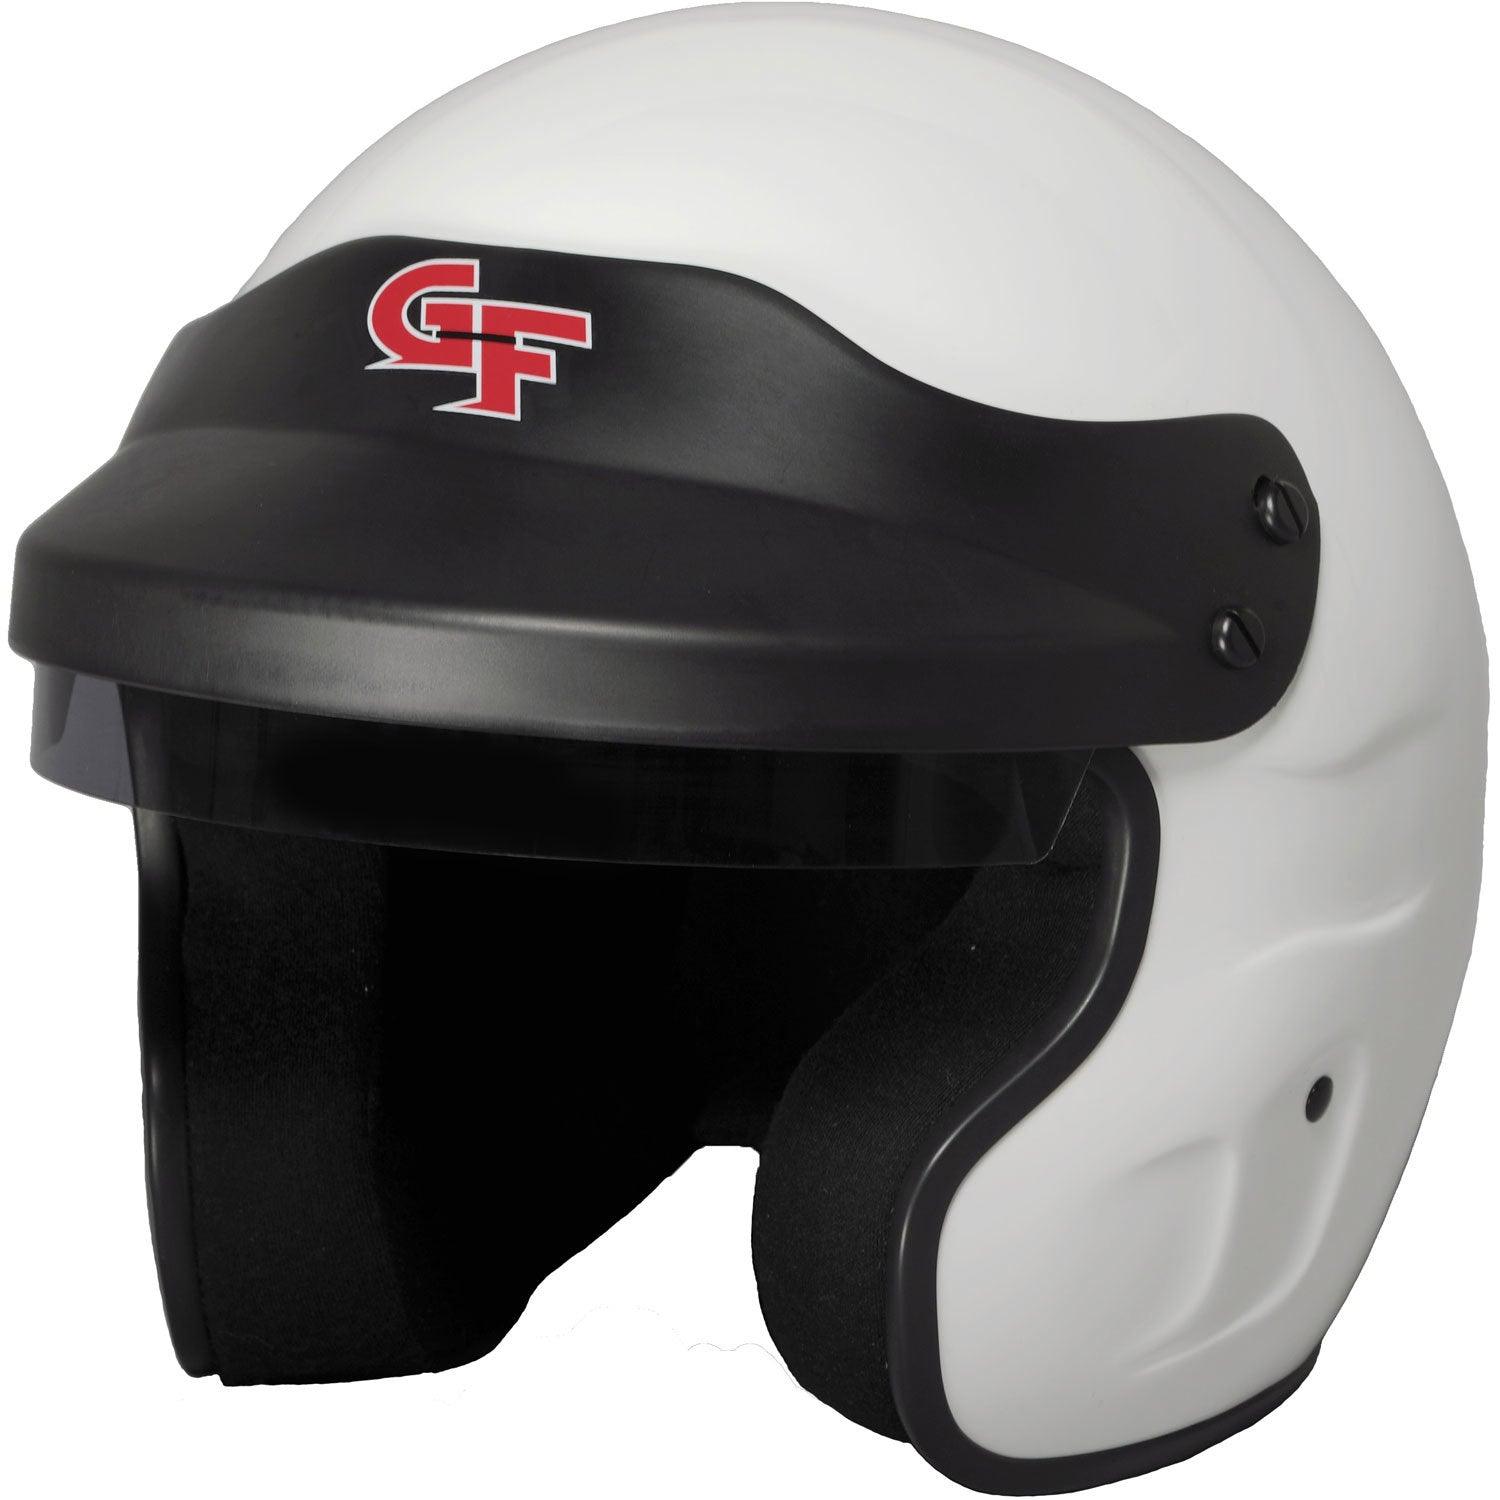 Helmet GF1 Open X-Large White SA2020 - Burlile Performance Products